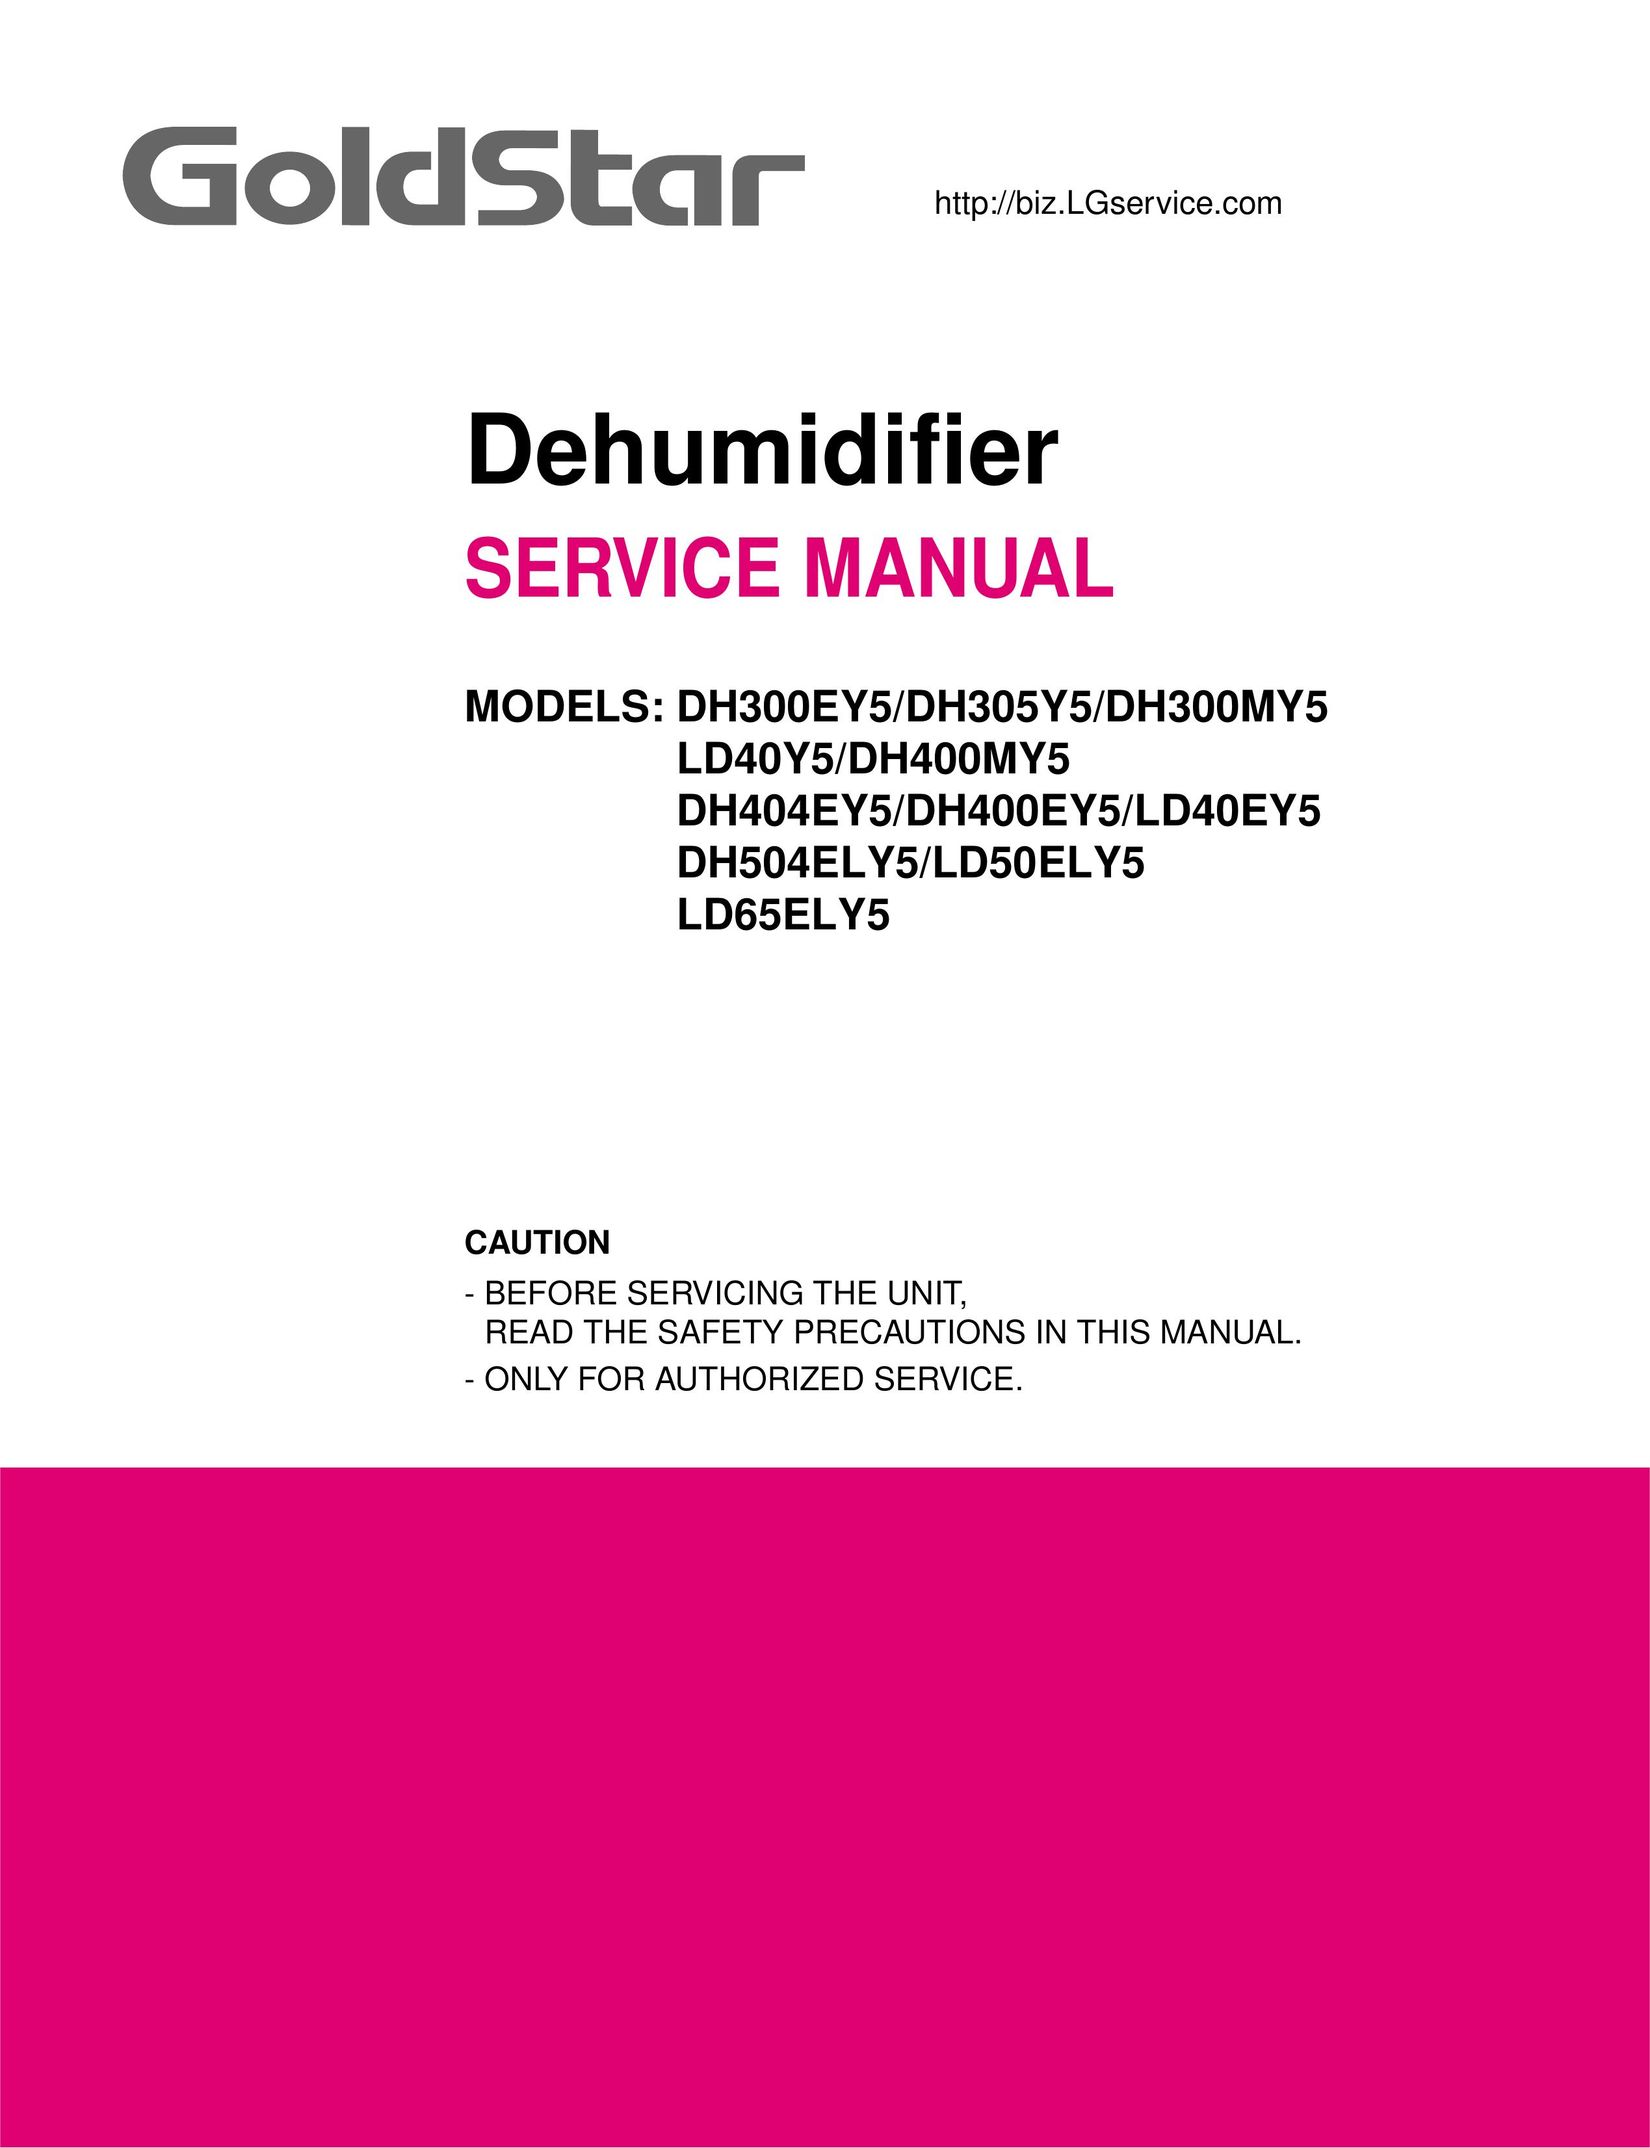 Frigidaire DH400EY5 Dehumidifier User Manual